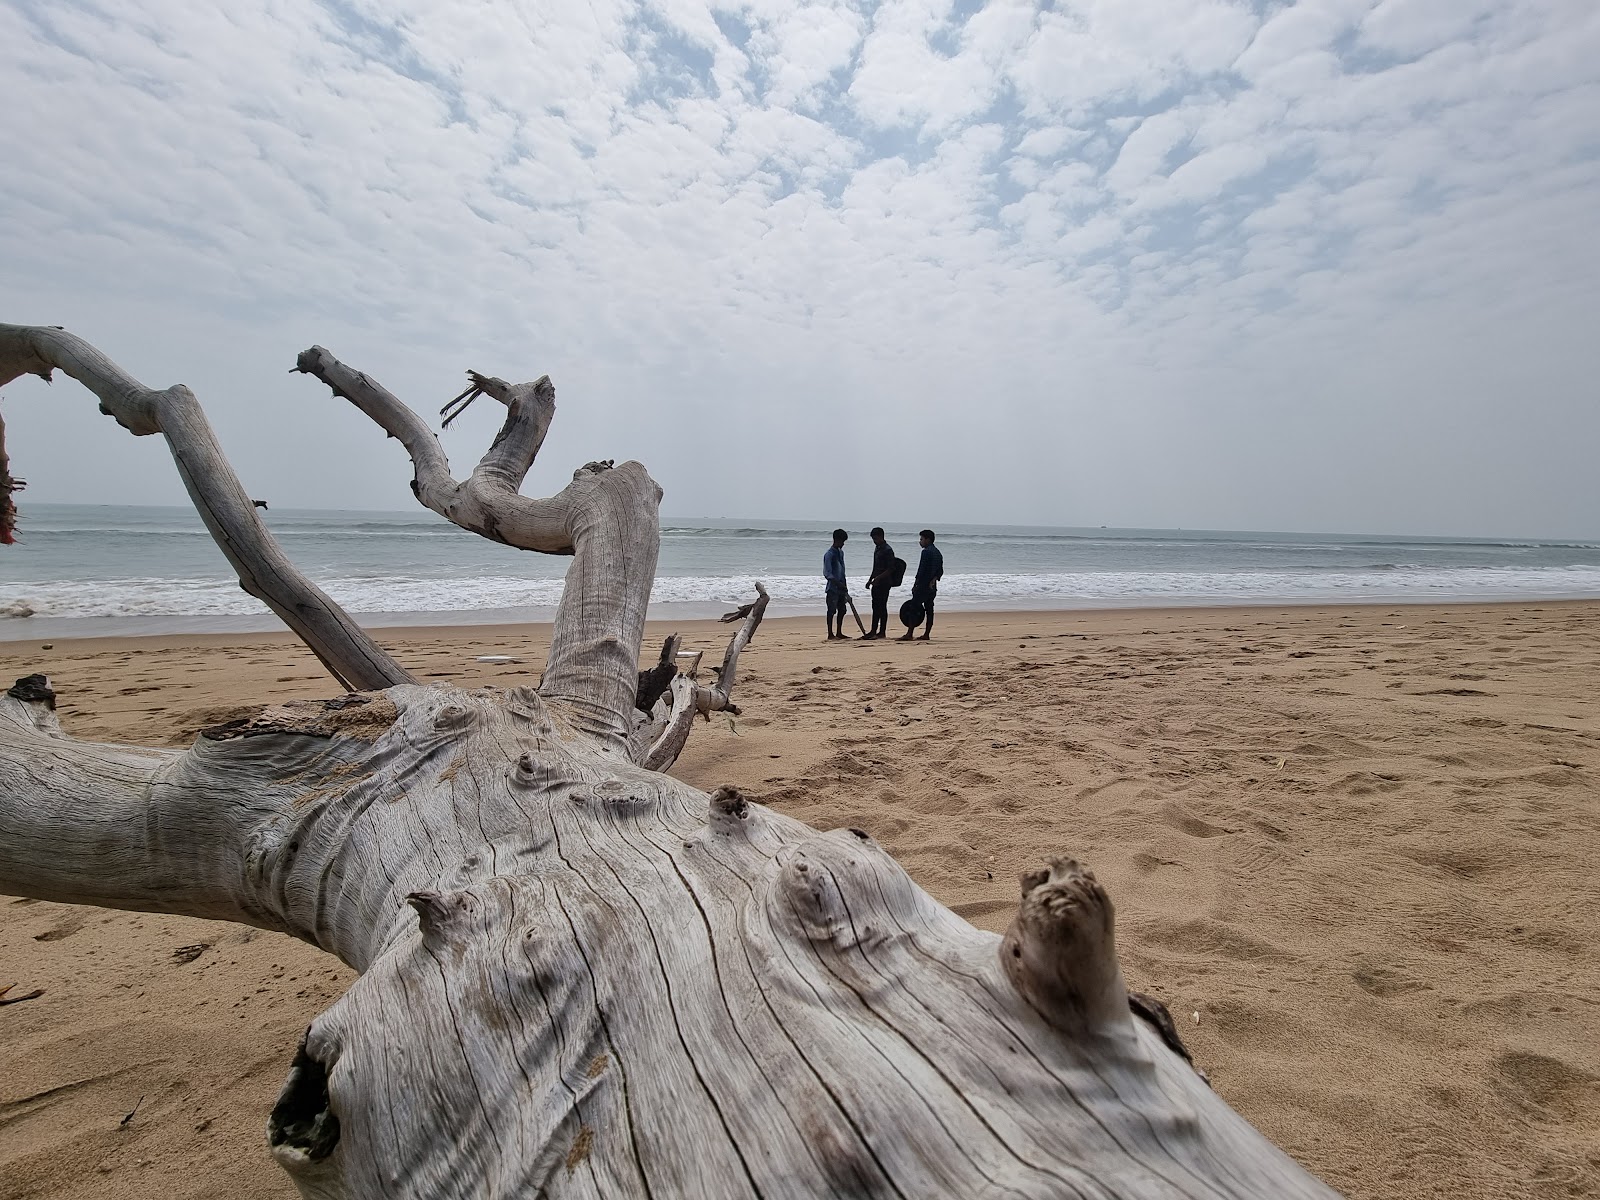 Fotografija Balighai Beach nahaja se v naravnem okolju